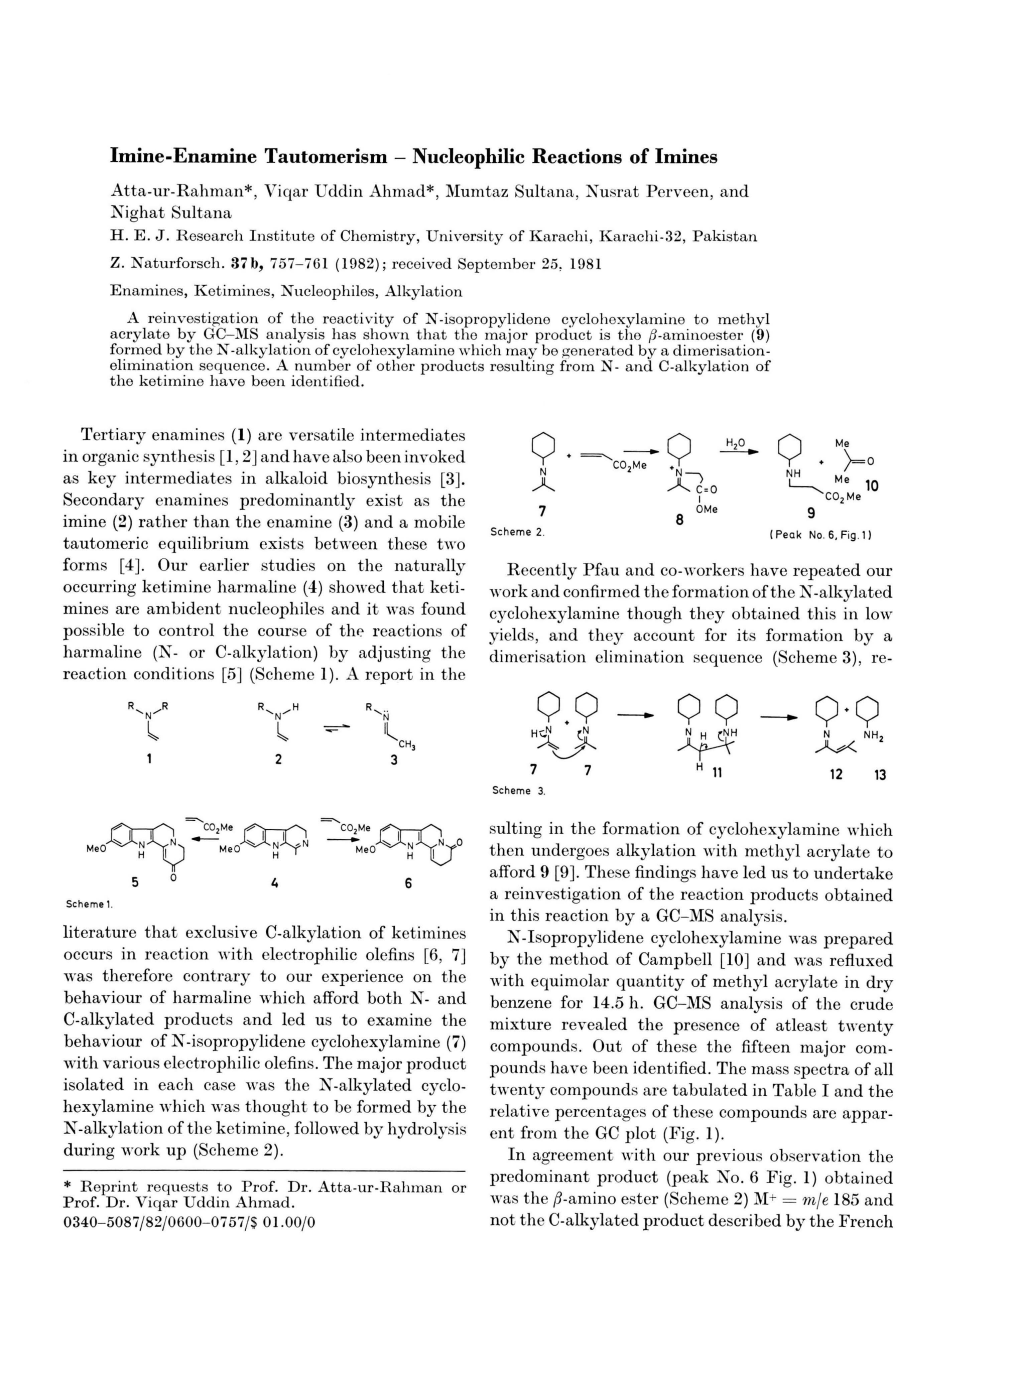 Imine-Enamine Tautomerism - Nucleophilic Reactions of Imines